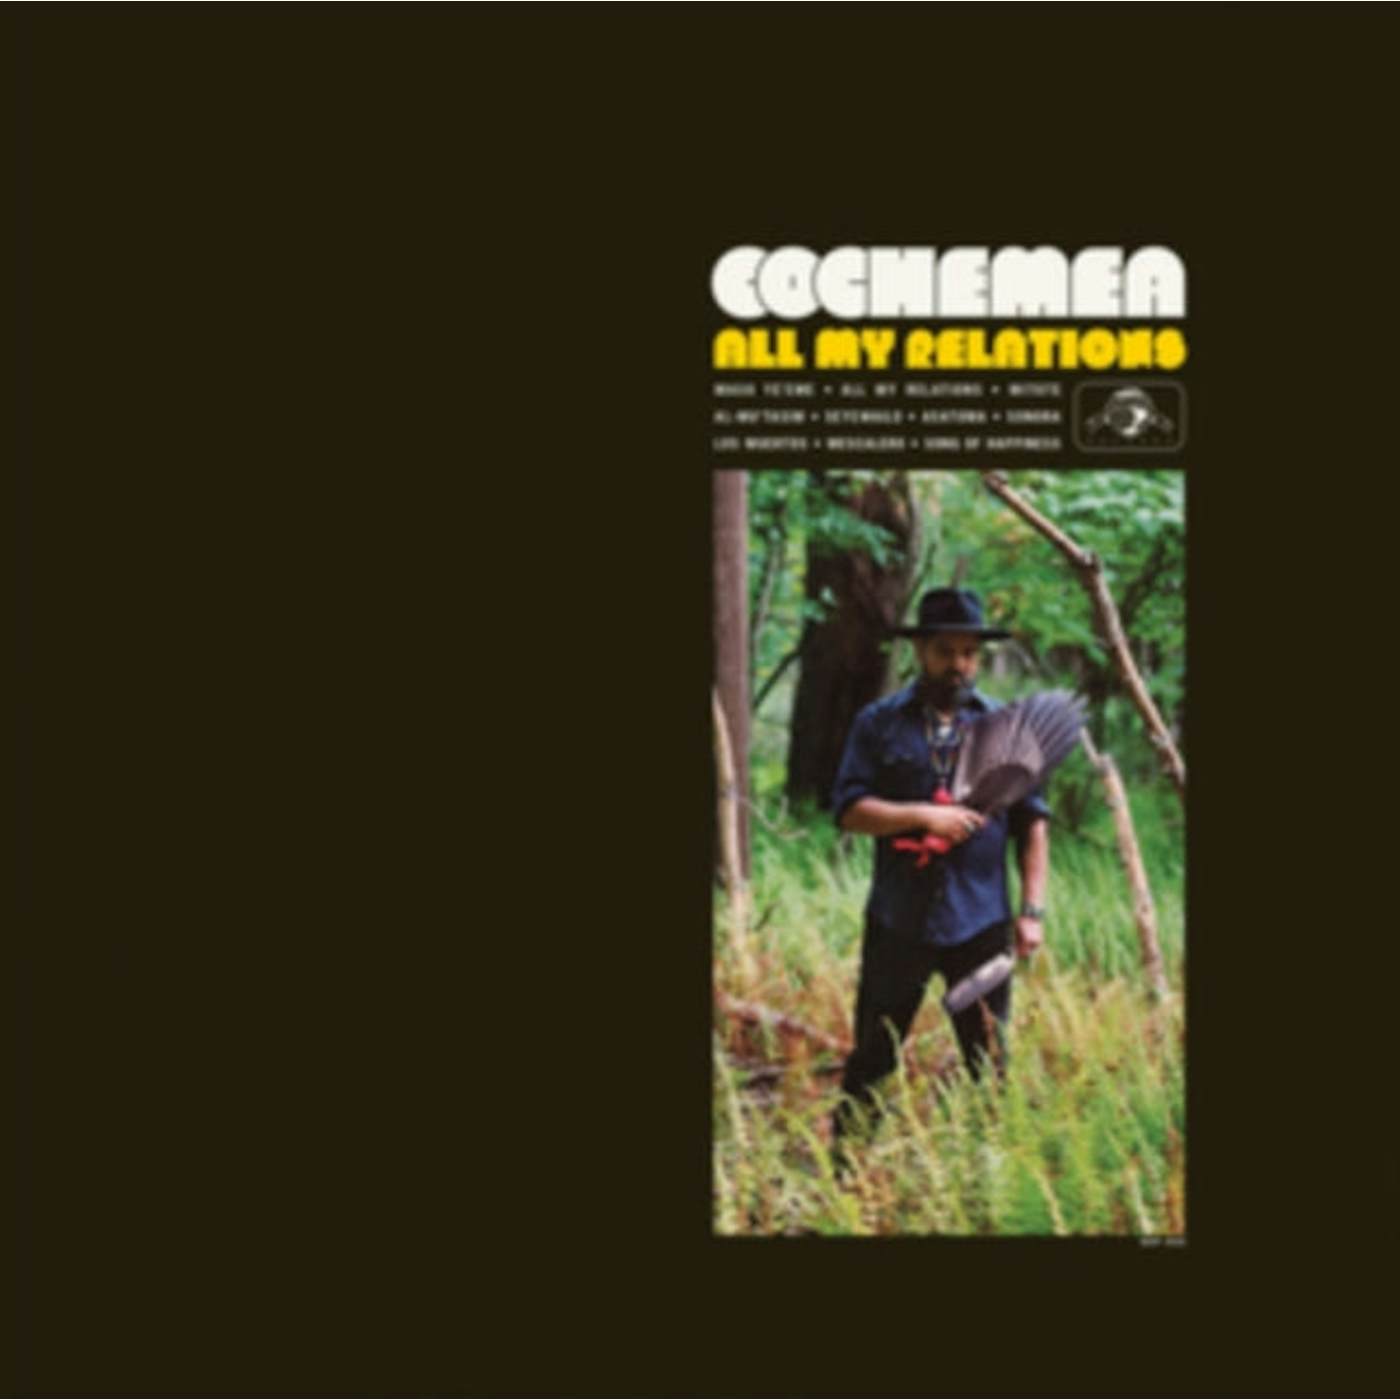 Cochemea LP - All My Relations (Vinyl)